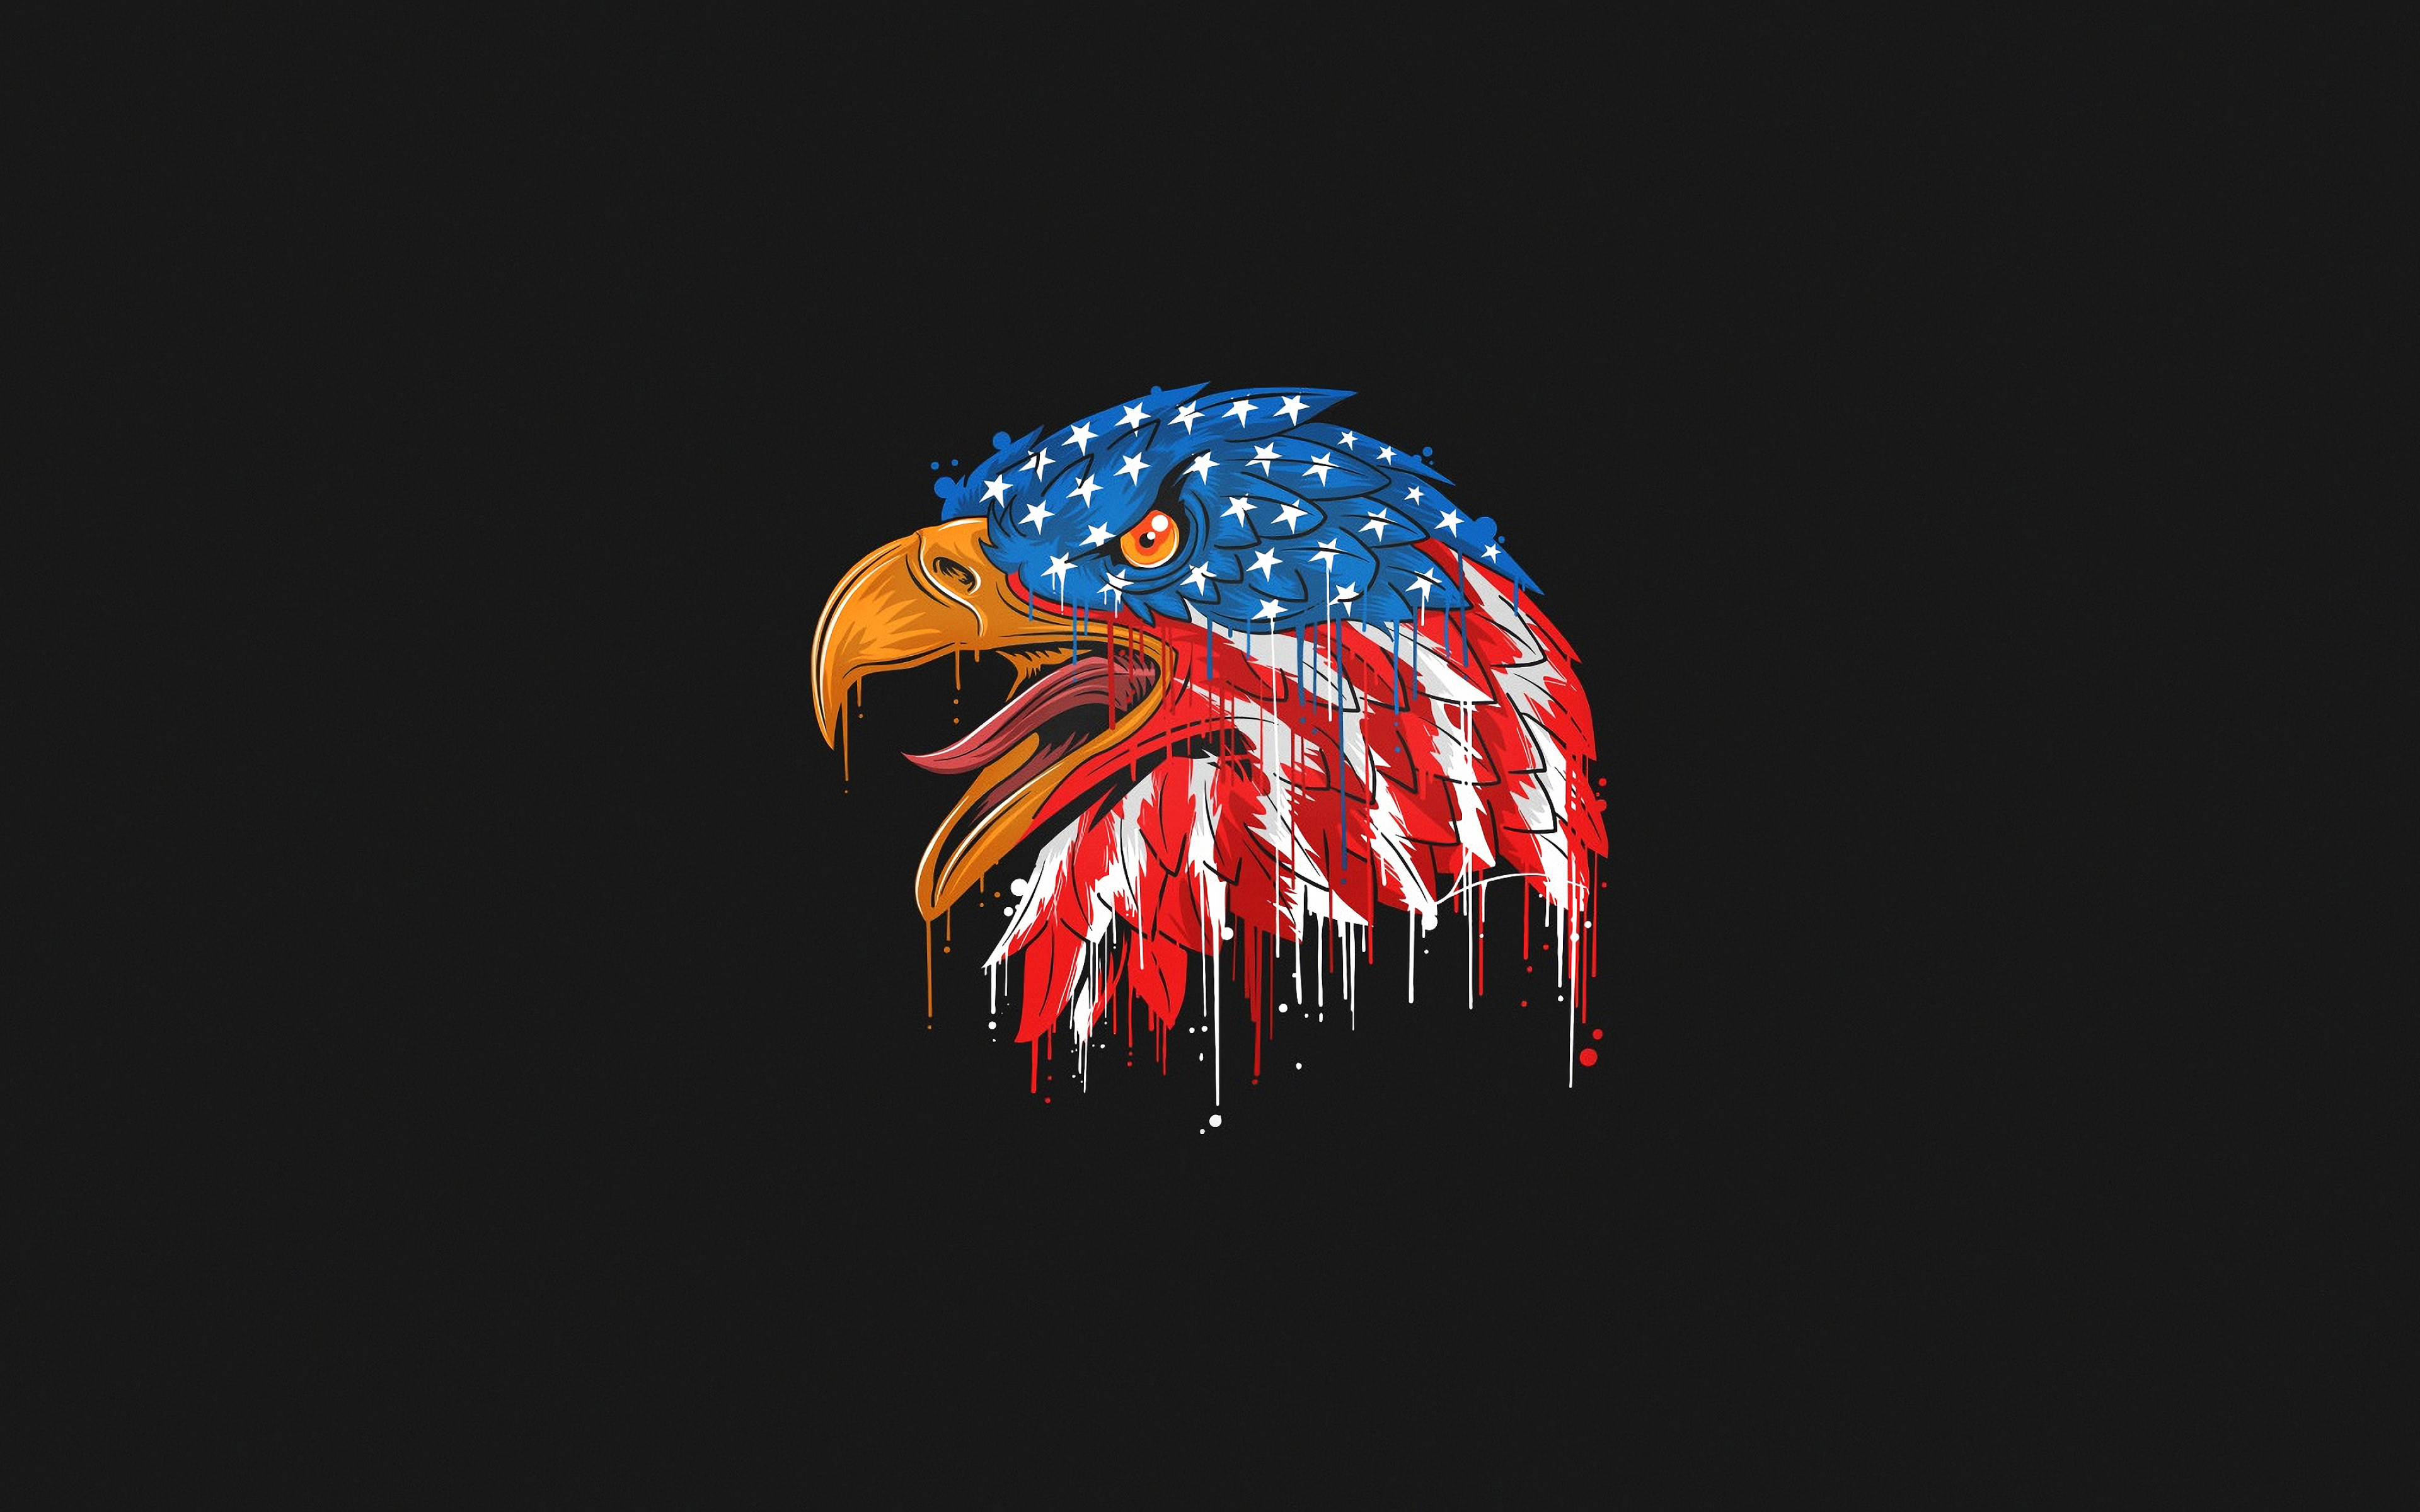 Download wallpaper 4k, bald eagle, artwork, american symbols, american flag, hawk, minimal, creative, symbols of USA, eagle for desktop with resolution 3840x2400. High Quality HD picture wallpaper